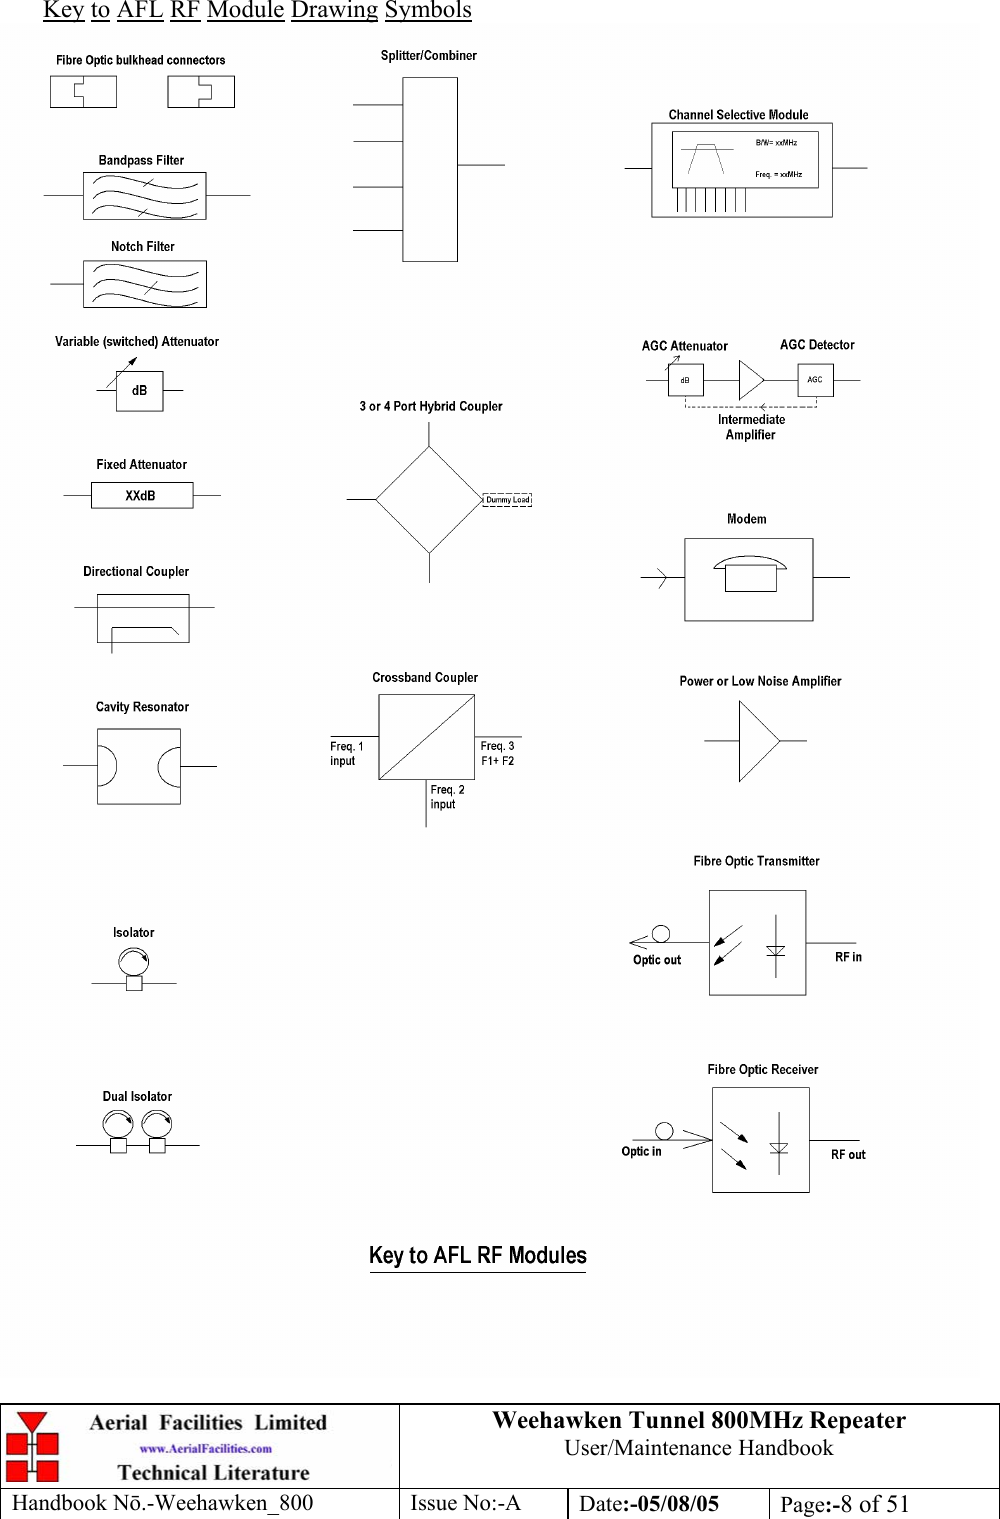 Weehawken Tunnel 800MHz Repeater User/Maintenance Handbook Handbook N.-Weehawken_800 Issue No:-A Date:-05/08/05  Page:-8 of 51  Key to AFL RF Module Drawing Symbols  